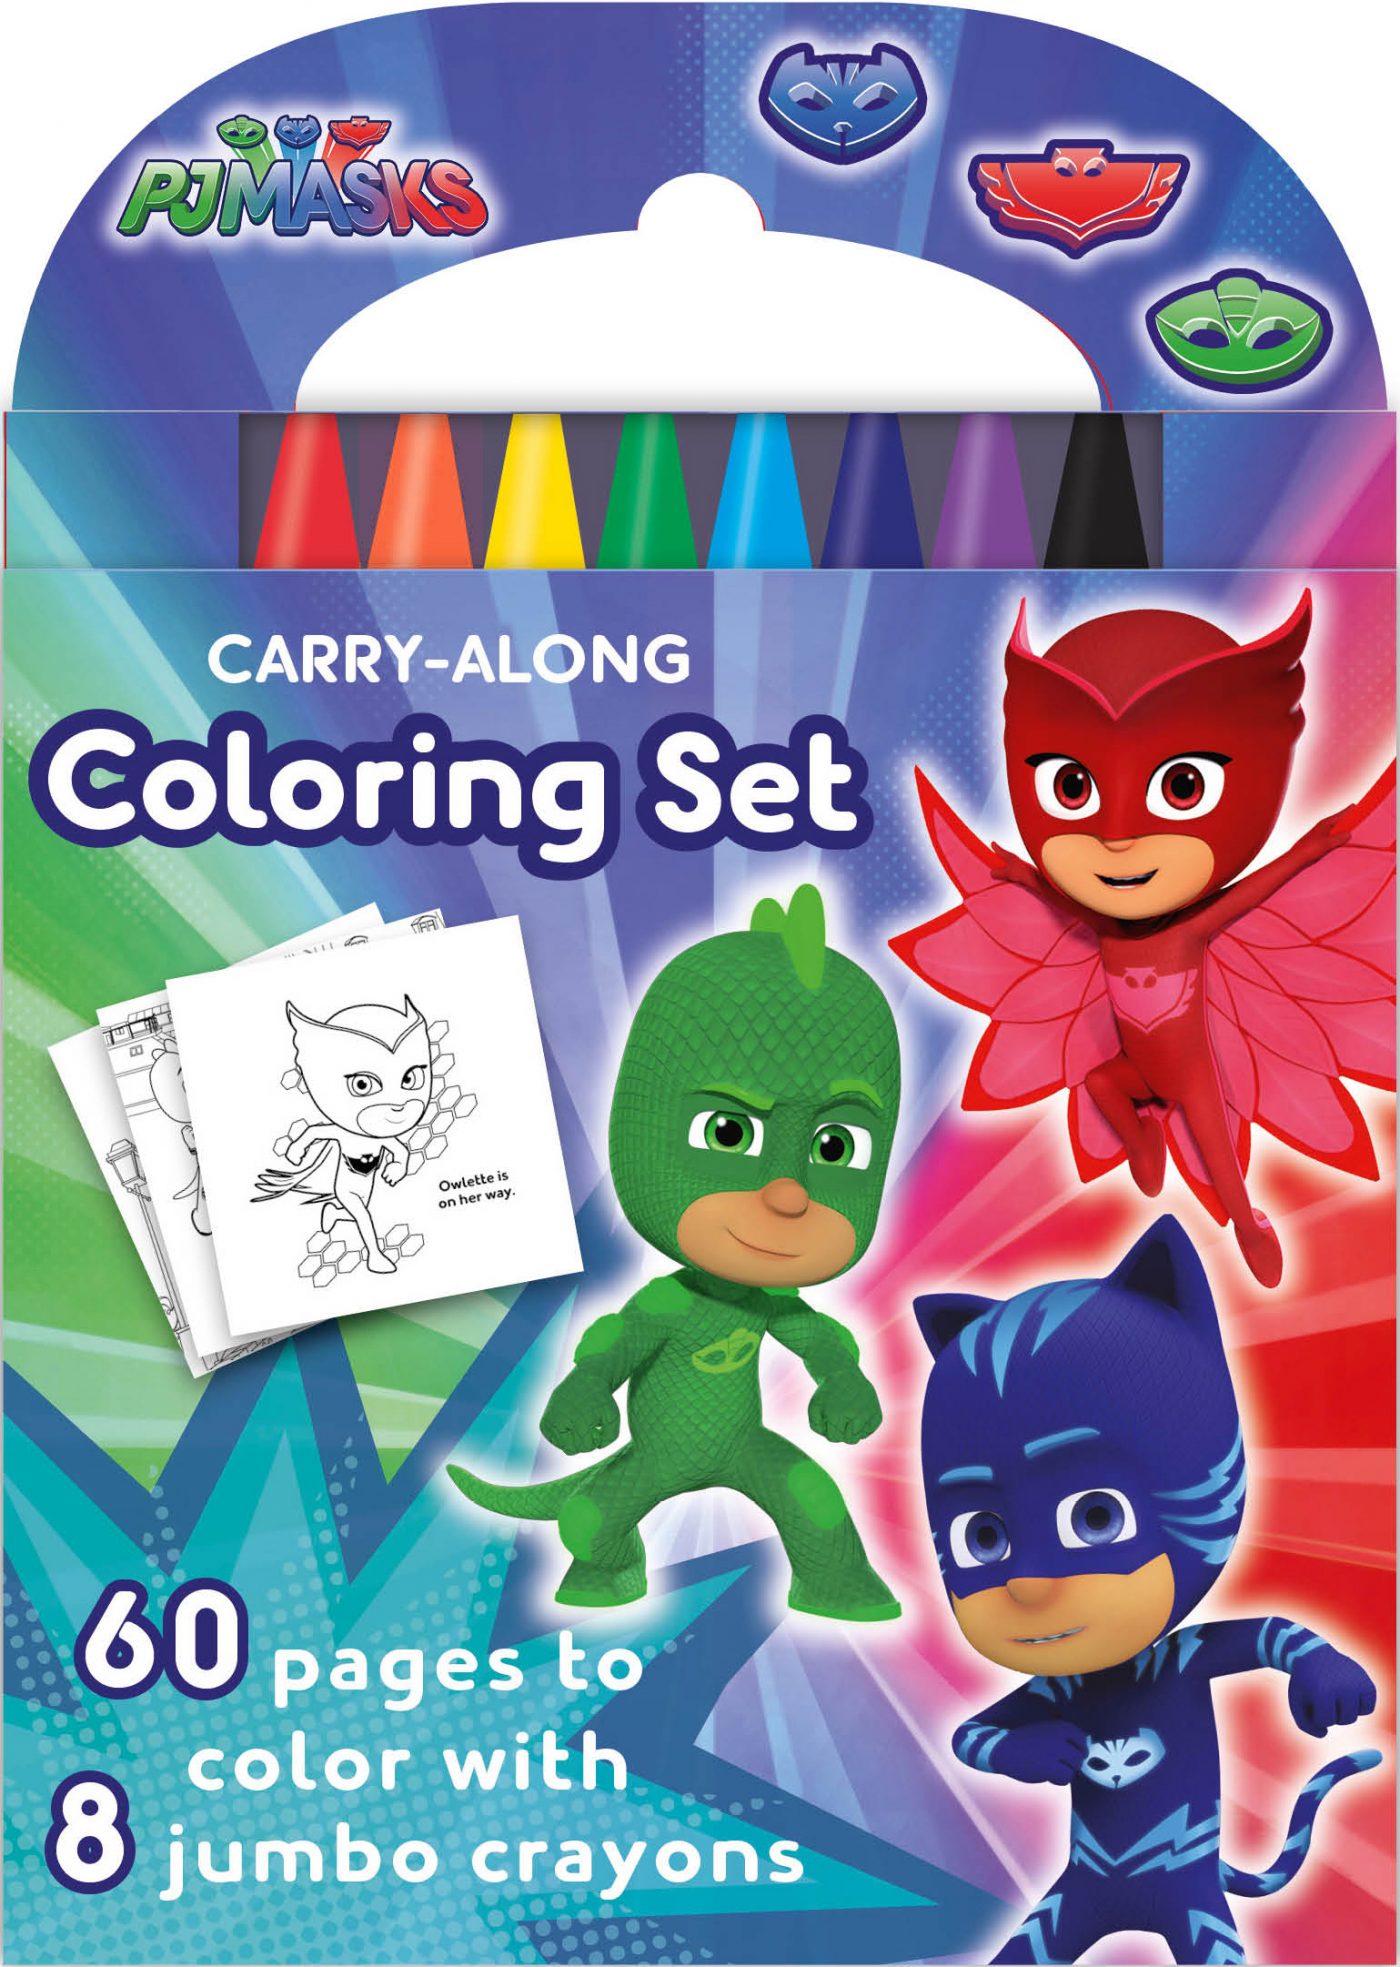 PJ Masks: Carry-Along Coloring Set